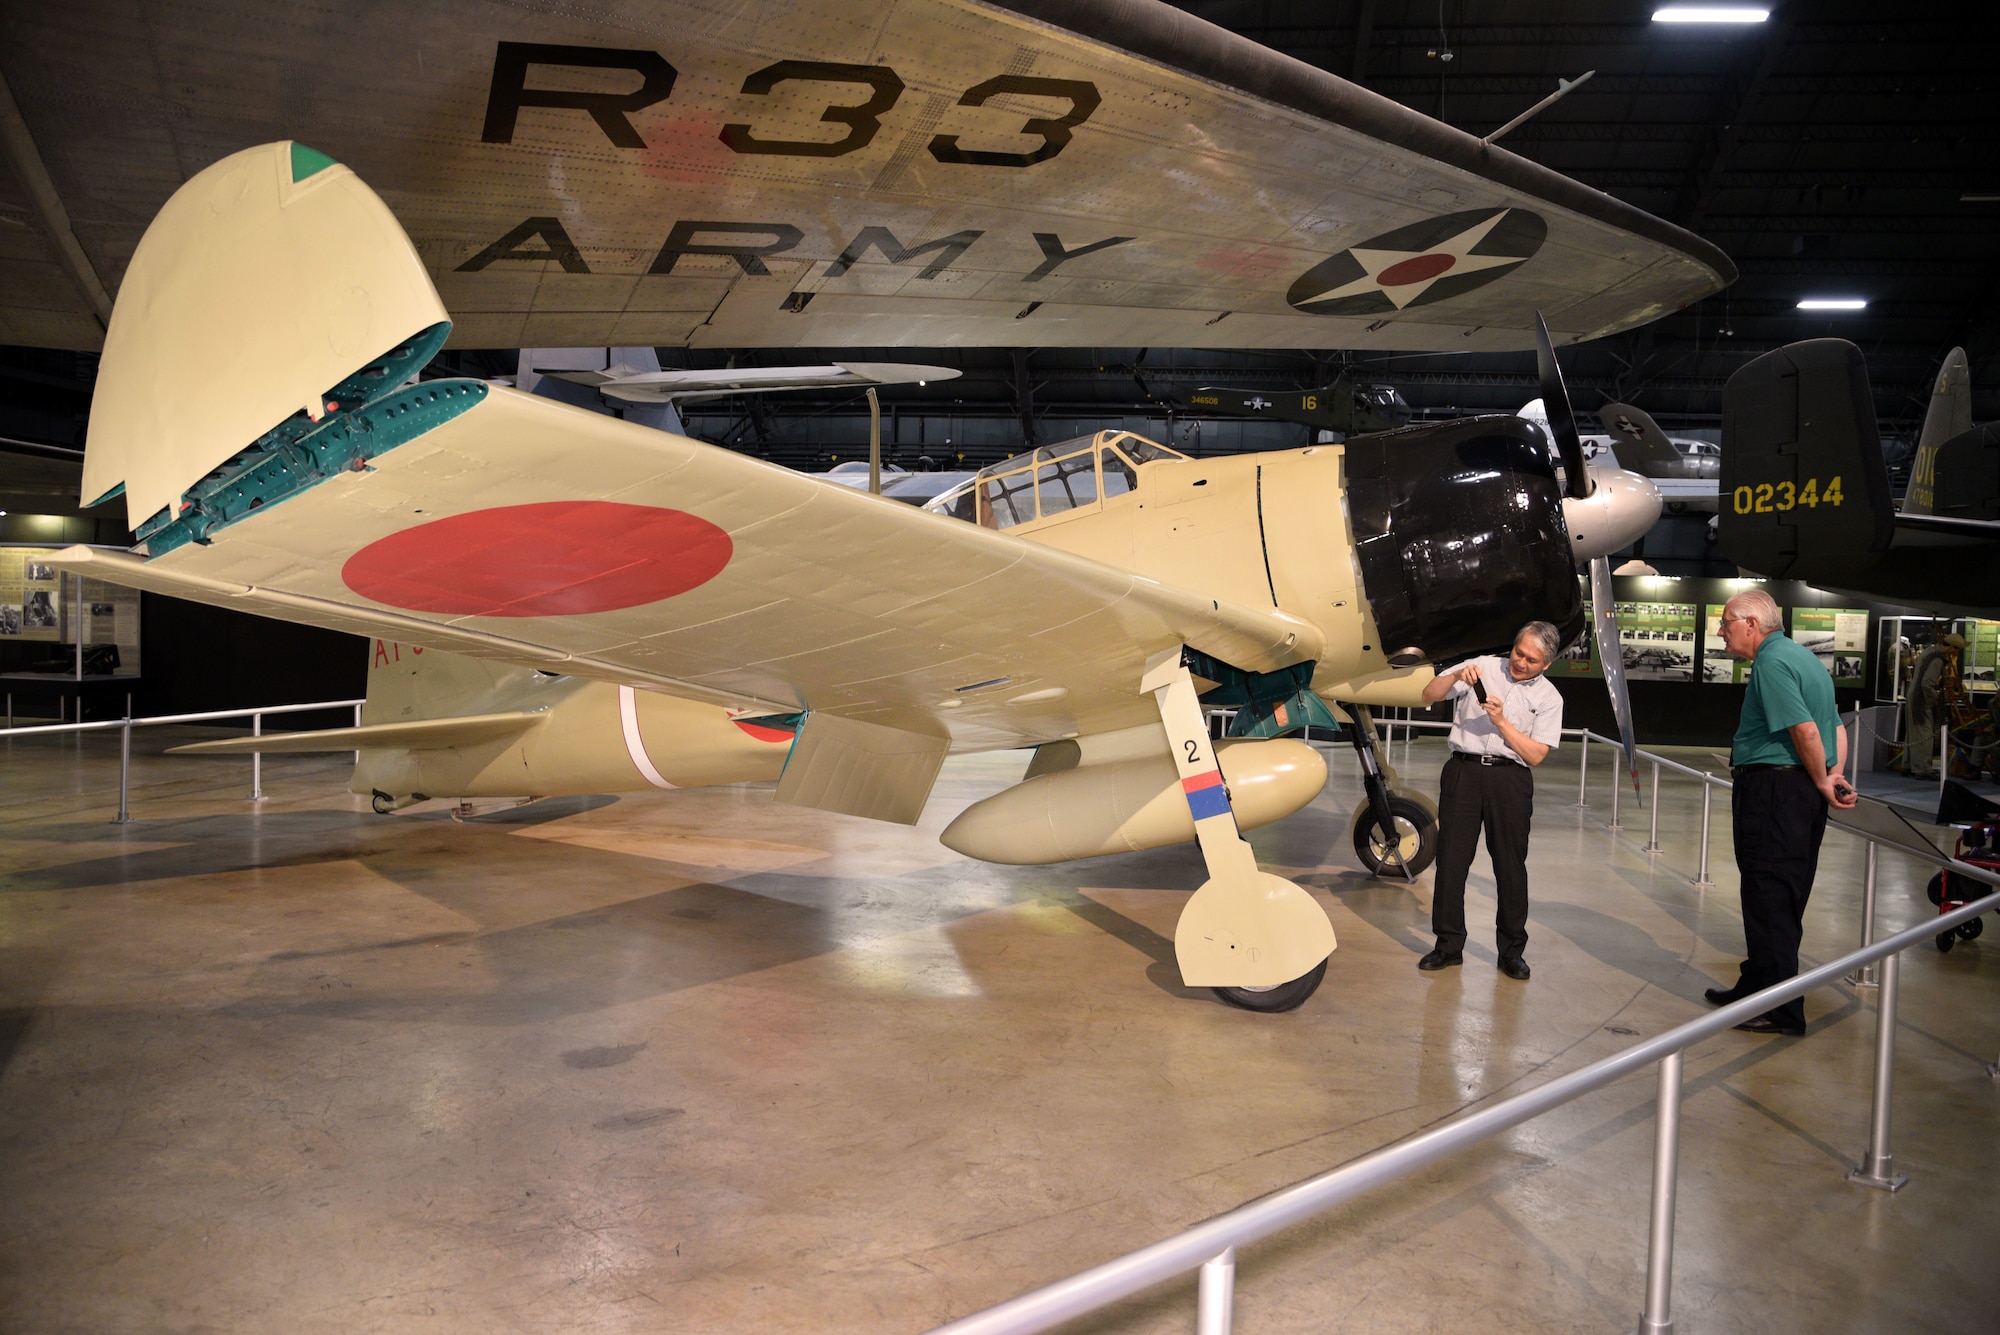 world war 2 japanese planes